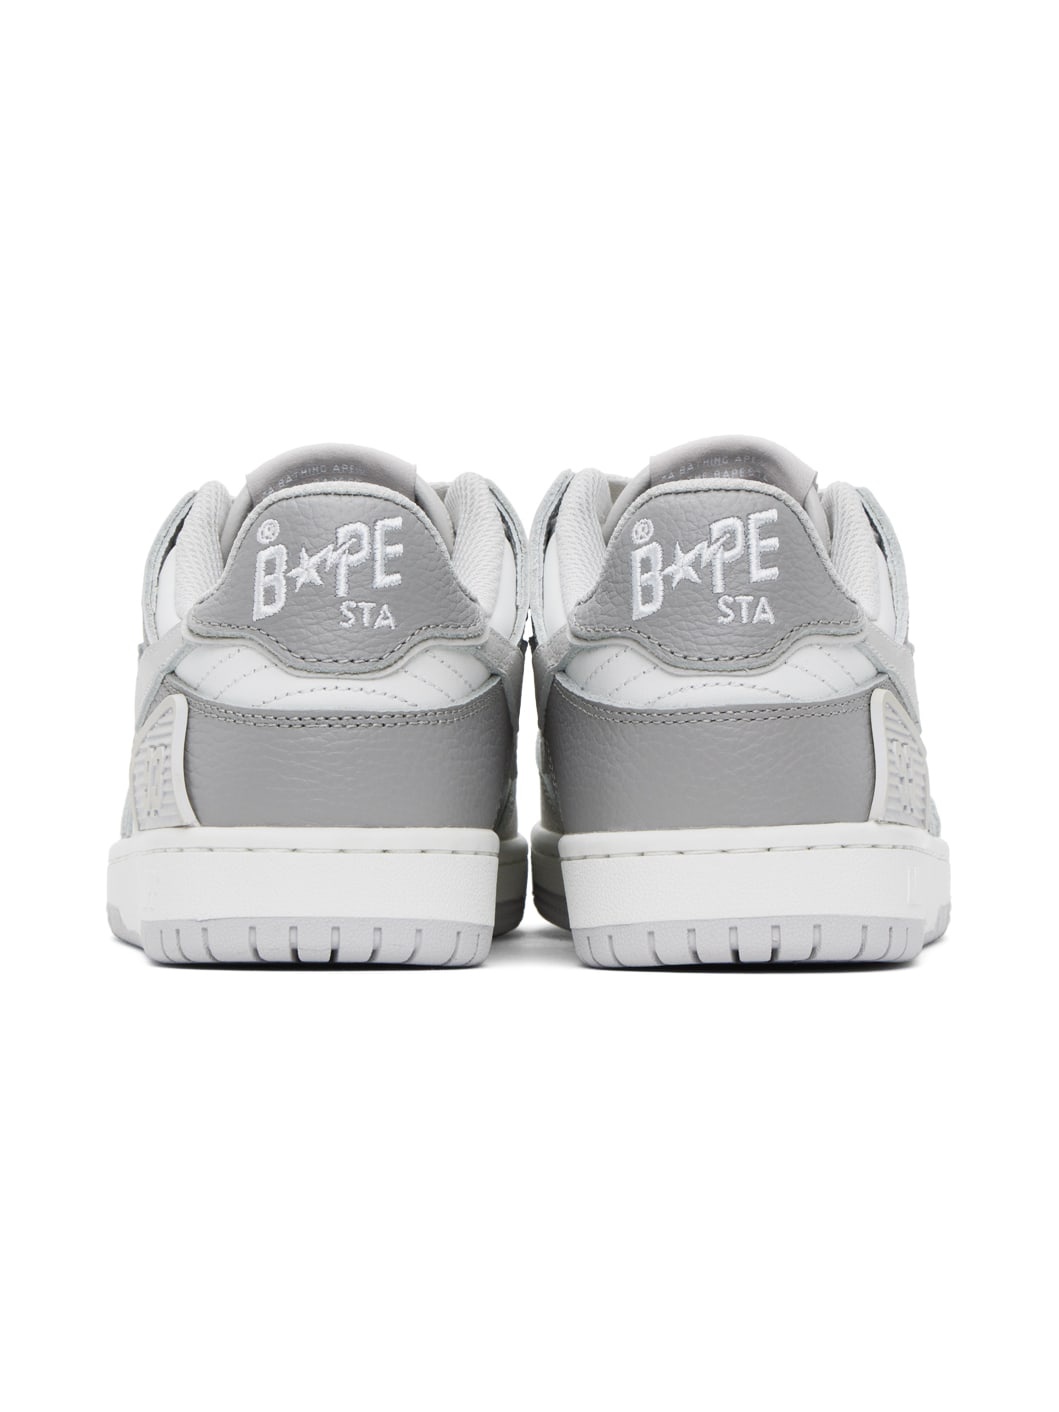 White & Gray Sk8 Sta #5 Sneakers - 2